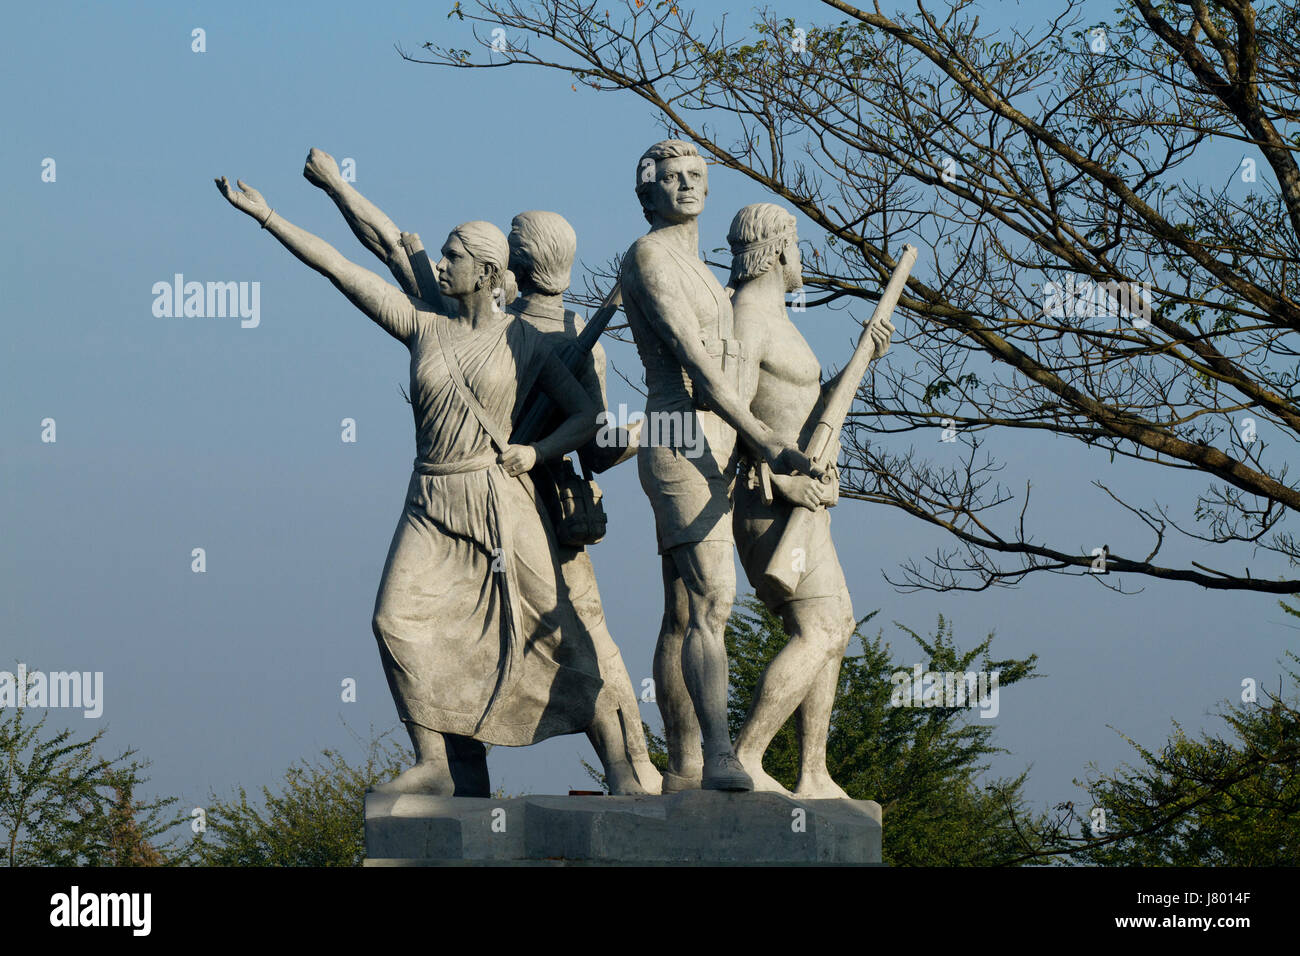 Odommo Bangla, una guerra di liberazione dei martiri memorial sculpture presso l Università di Khulna. Khulna, Bangladesh. Foto Stock